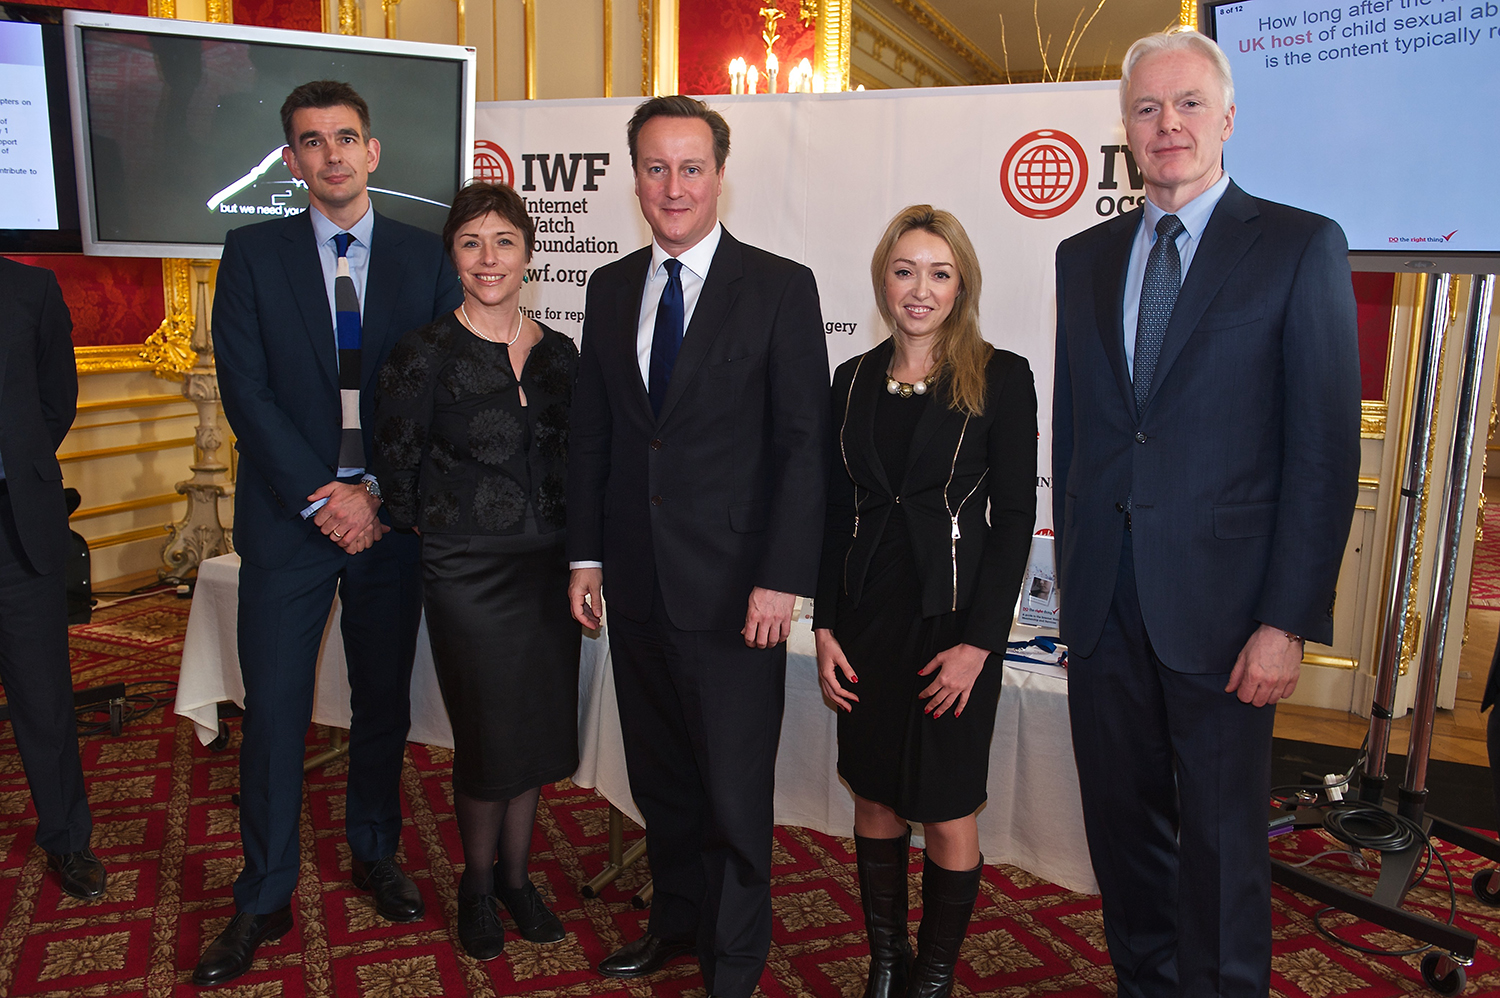 IWF leadership team with David Cameron 